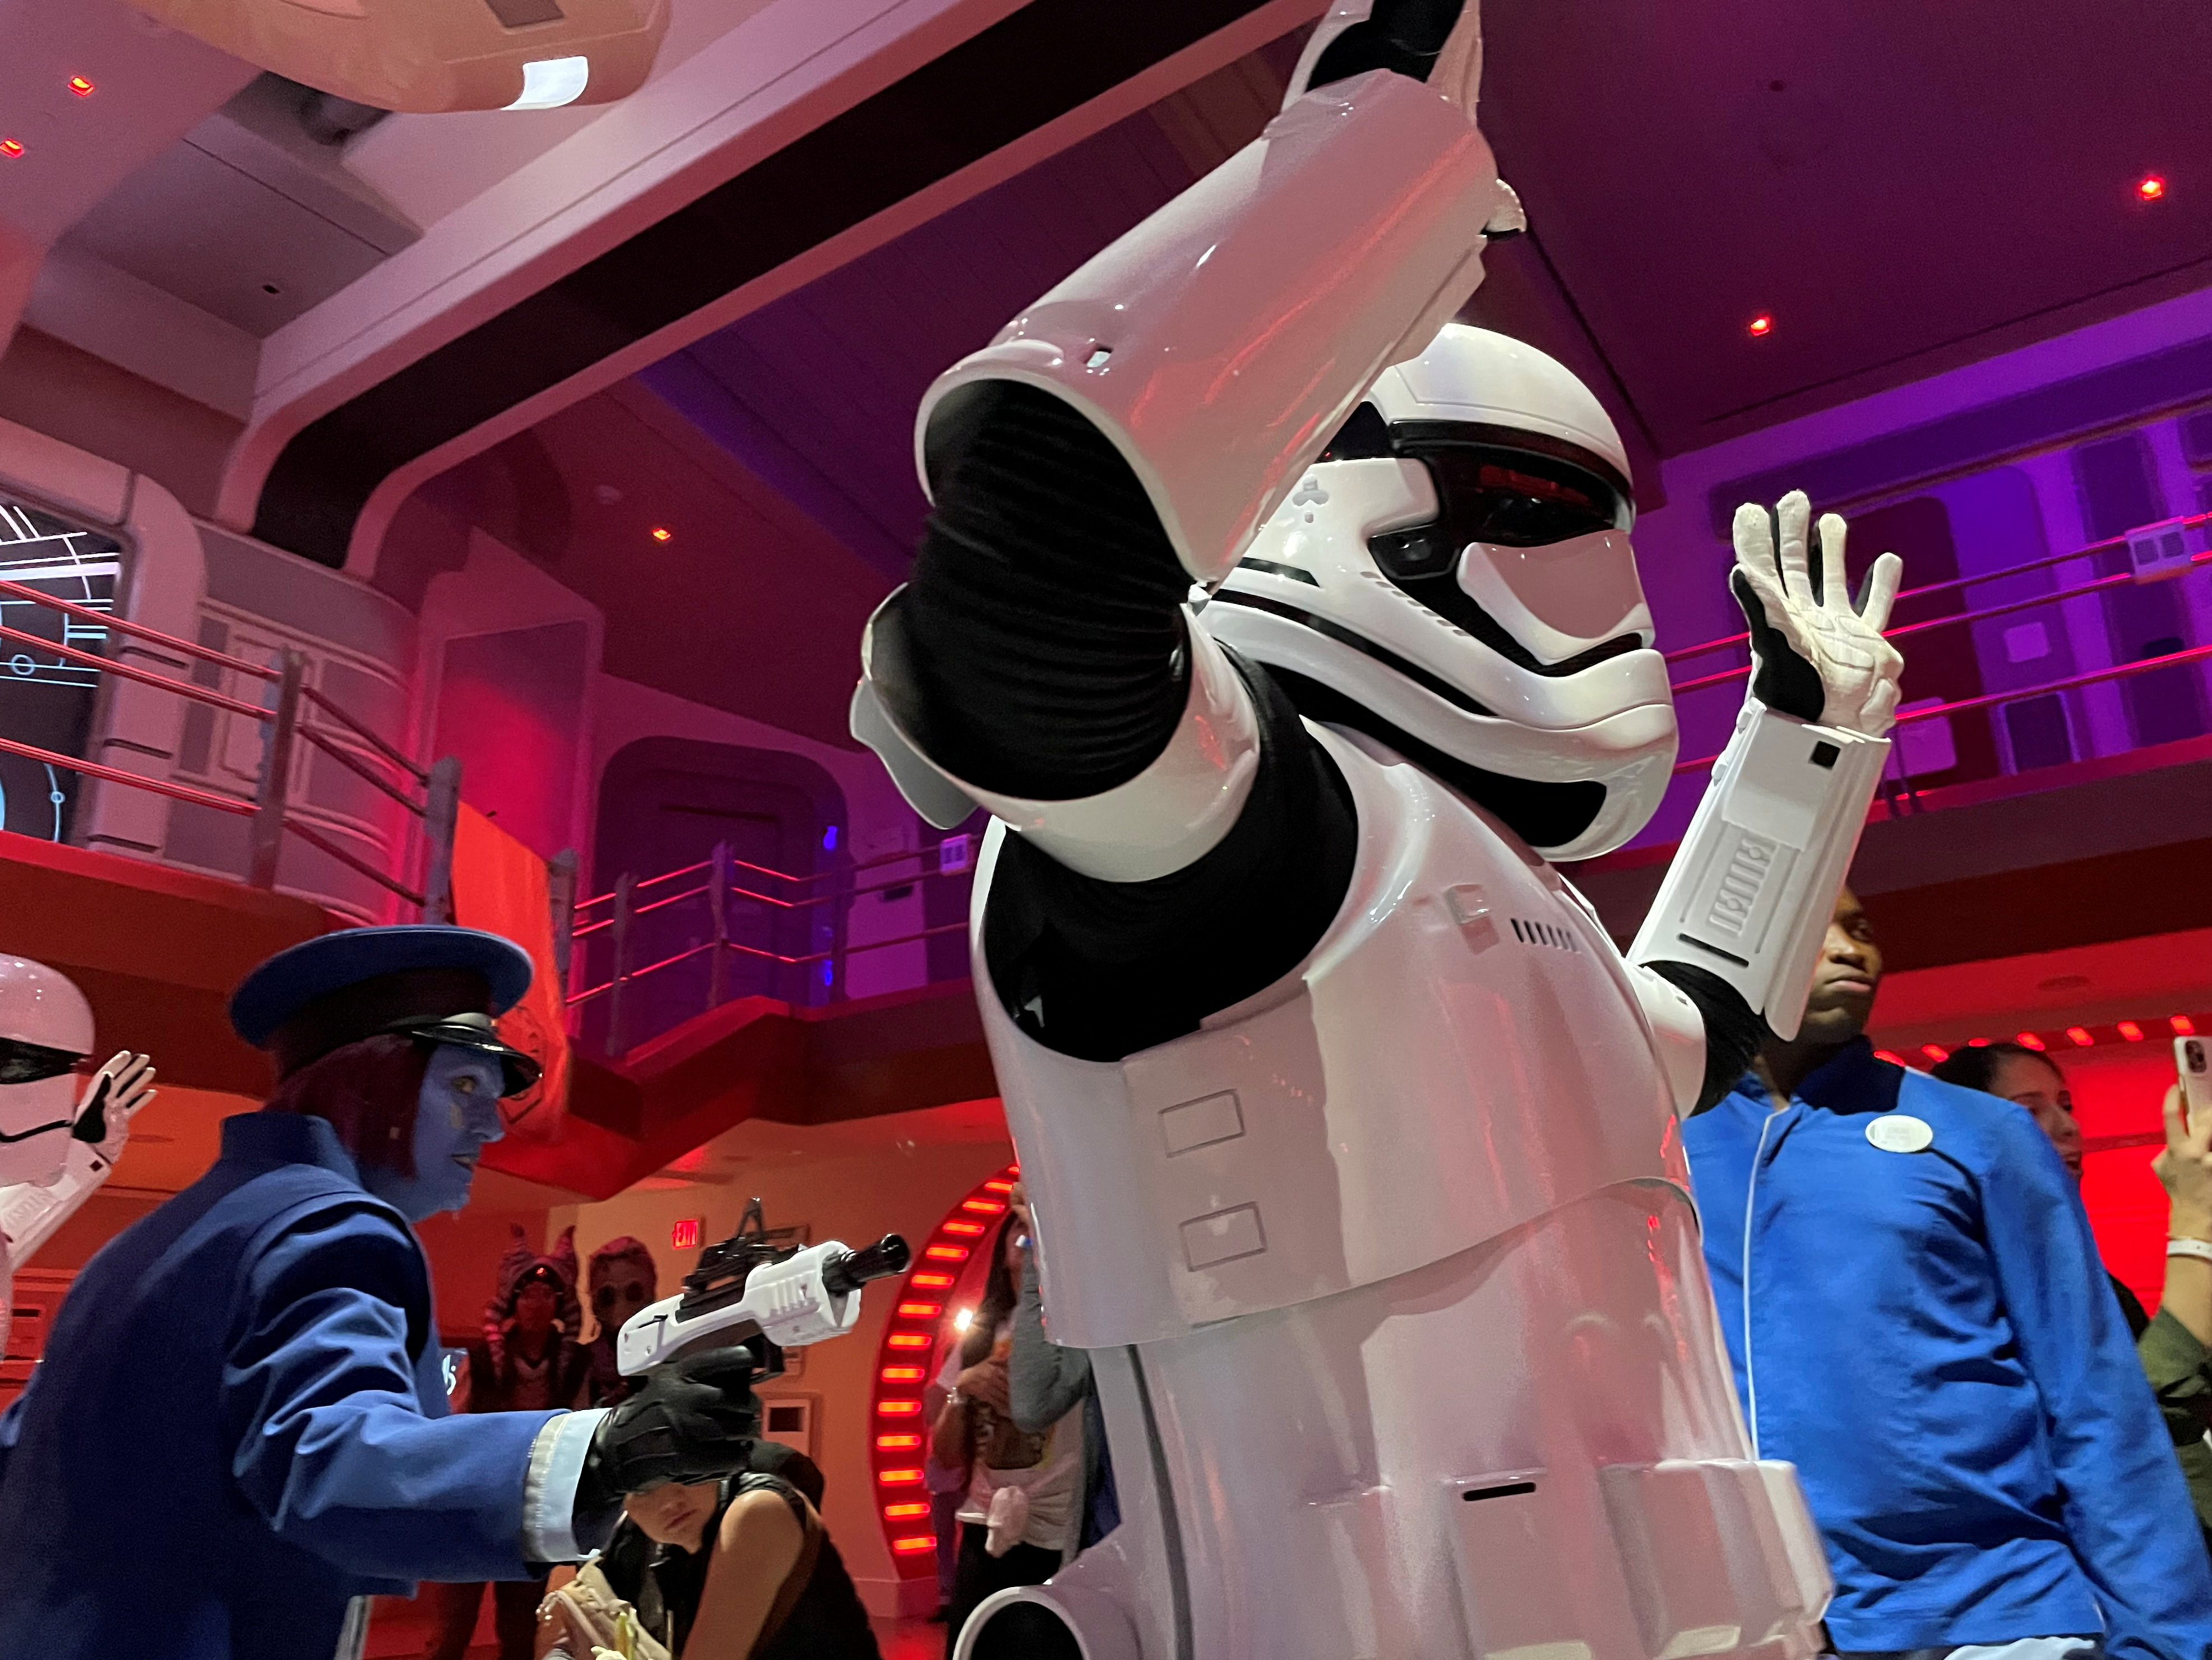 Star Wars characters perform at Walt Disney World in Orlando, Florida